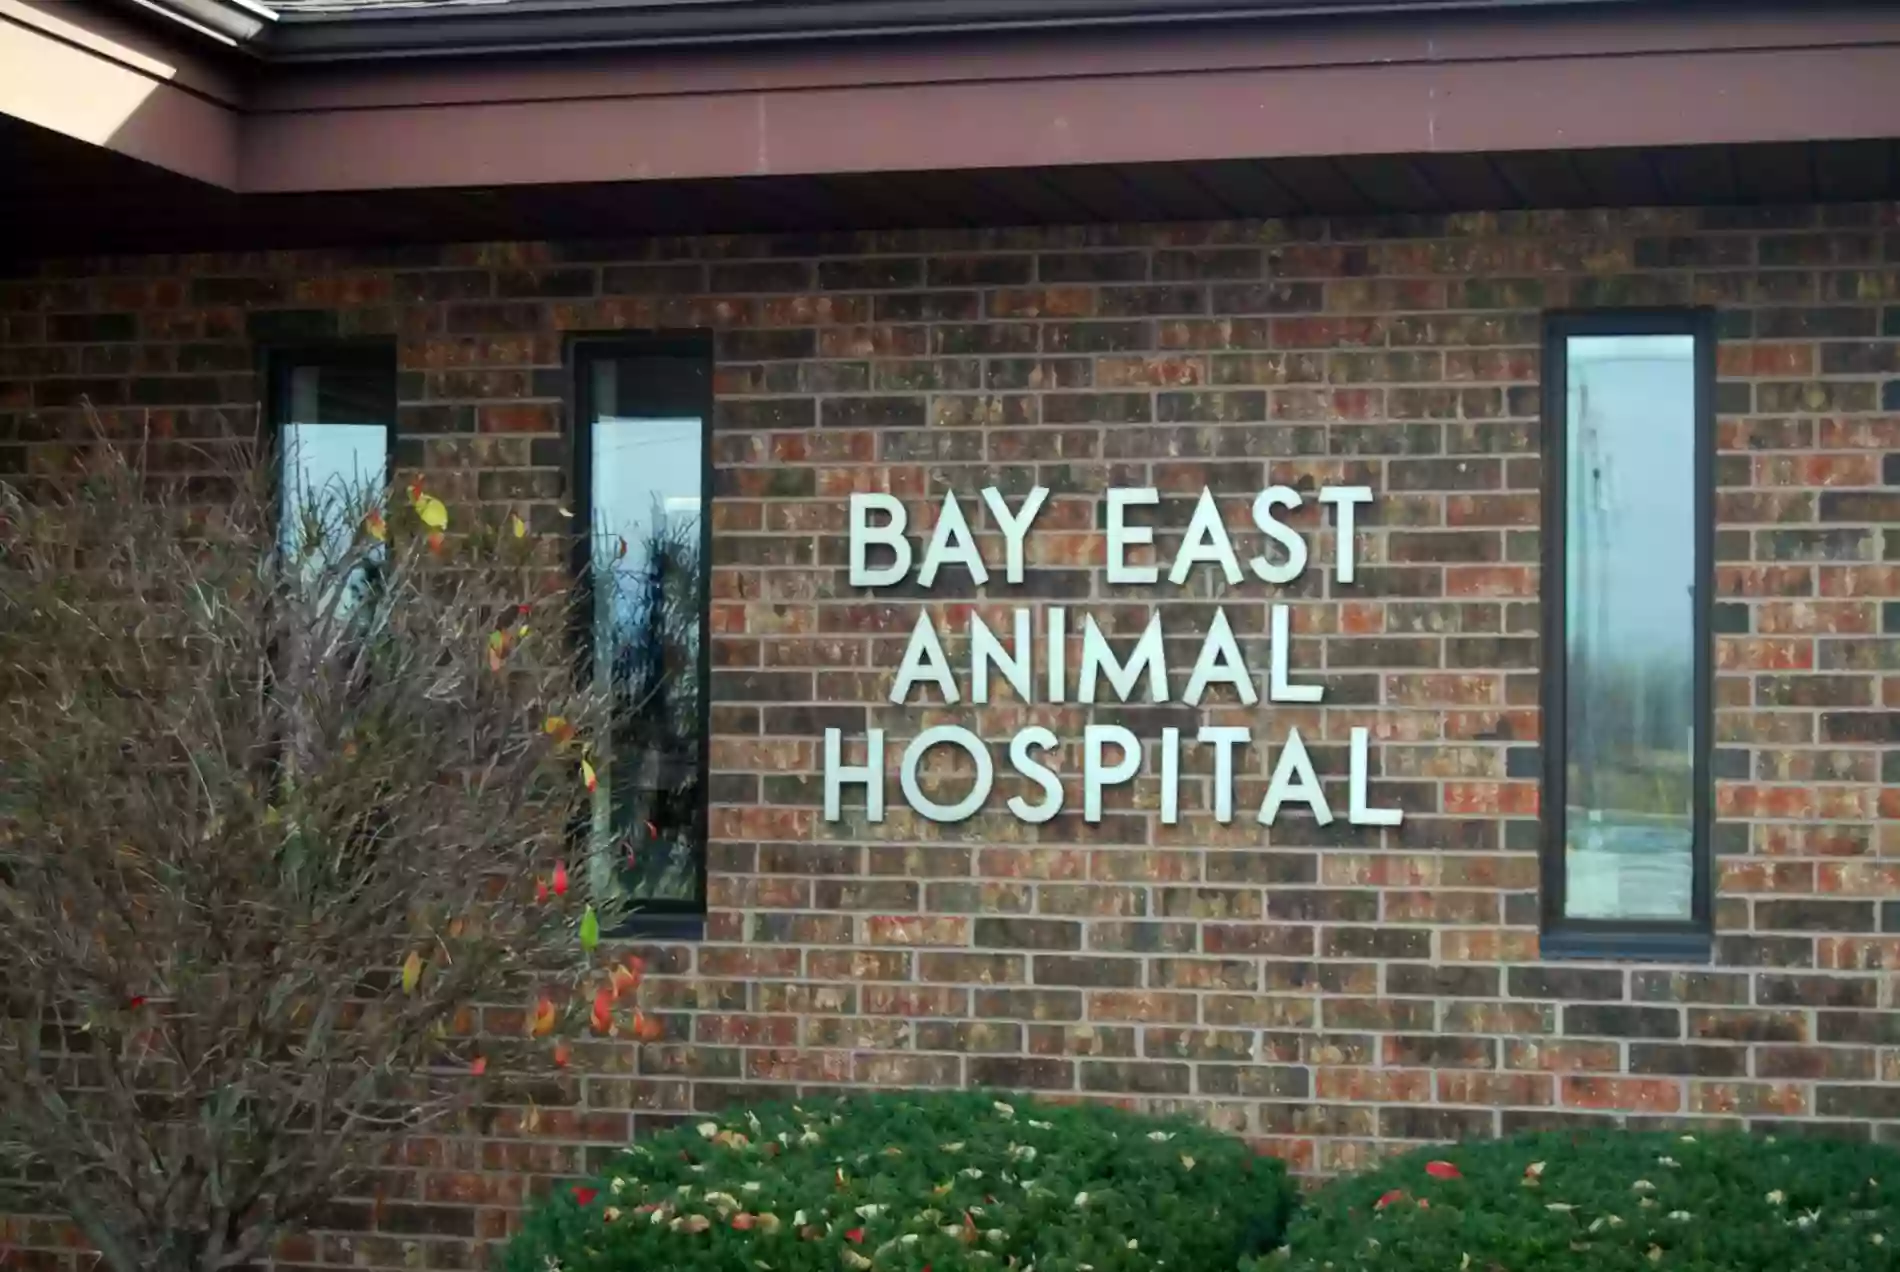 Bay East Animal Hospital: Zellmer Kirsten E DVM